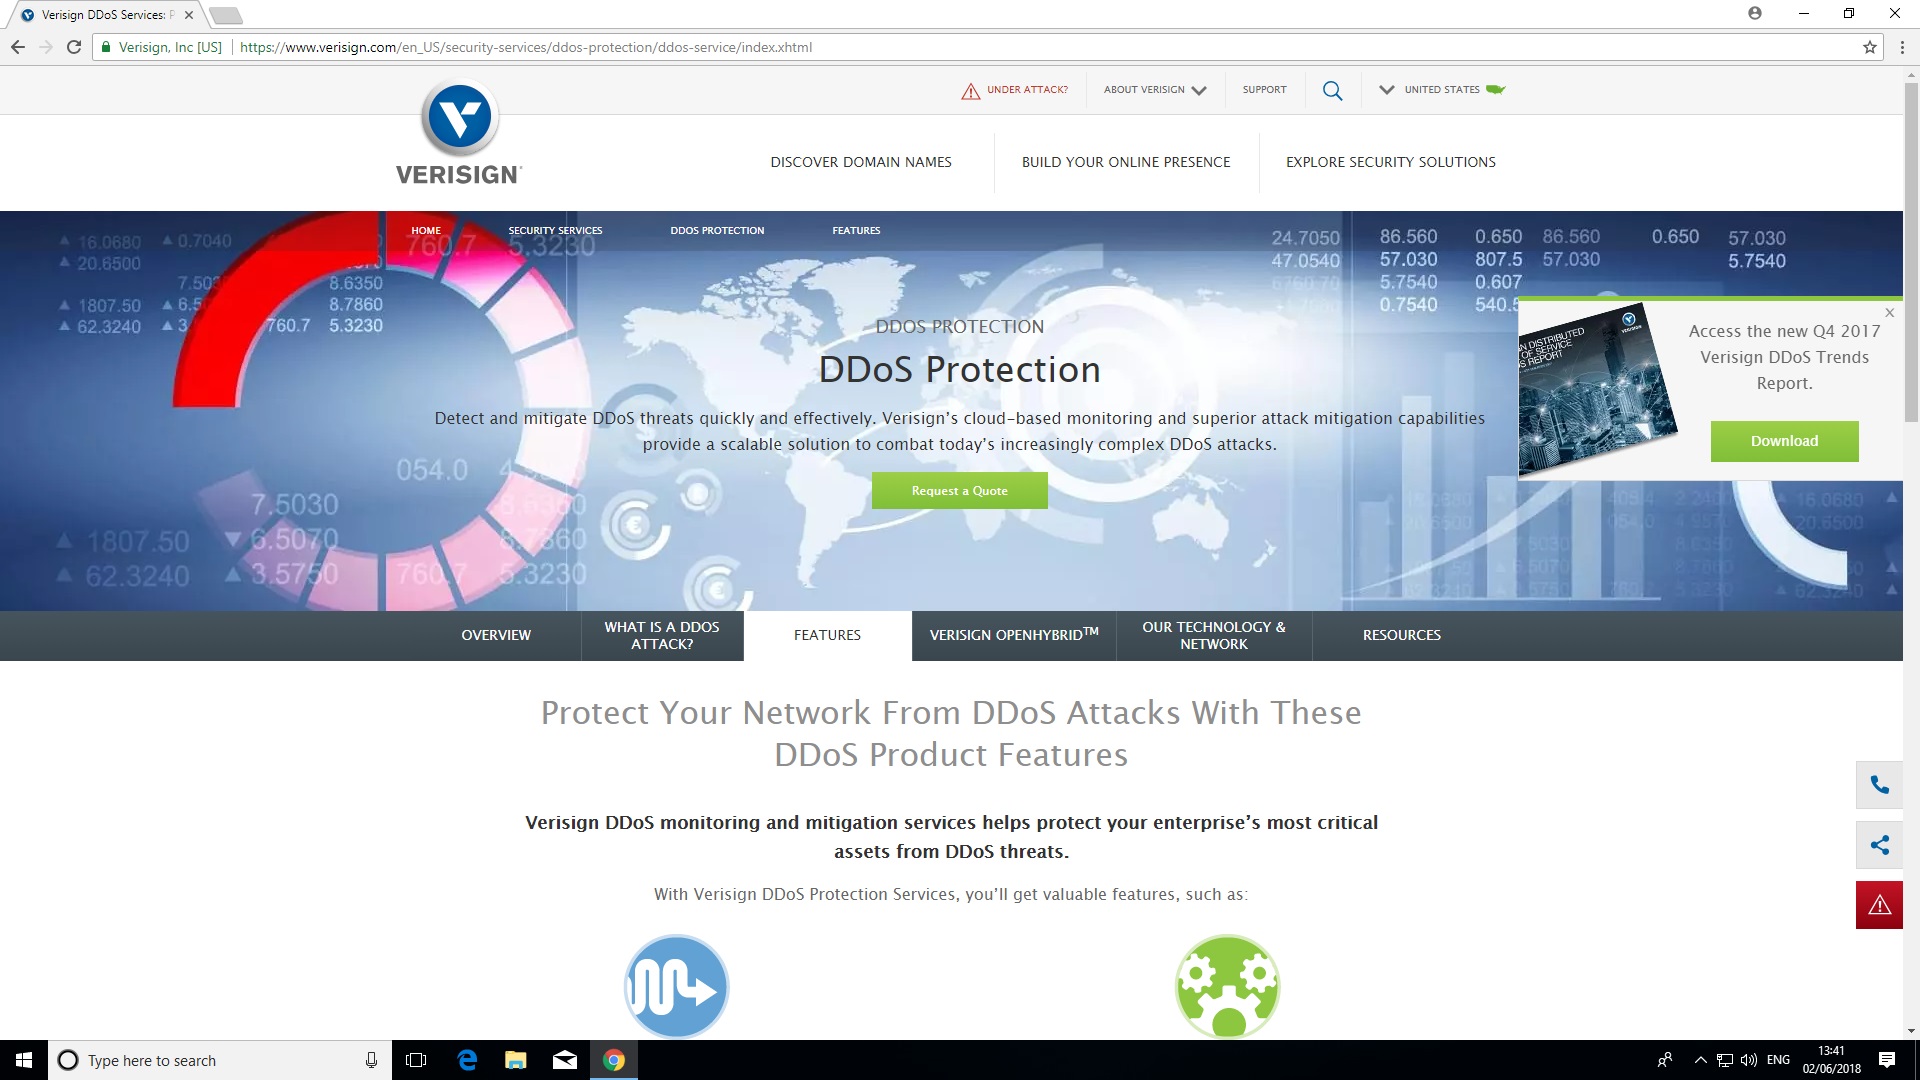 Verisign DDoS Protection